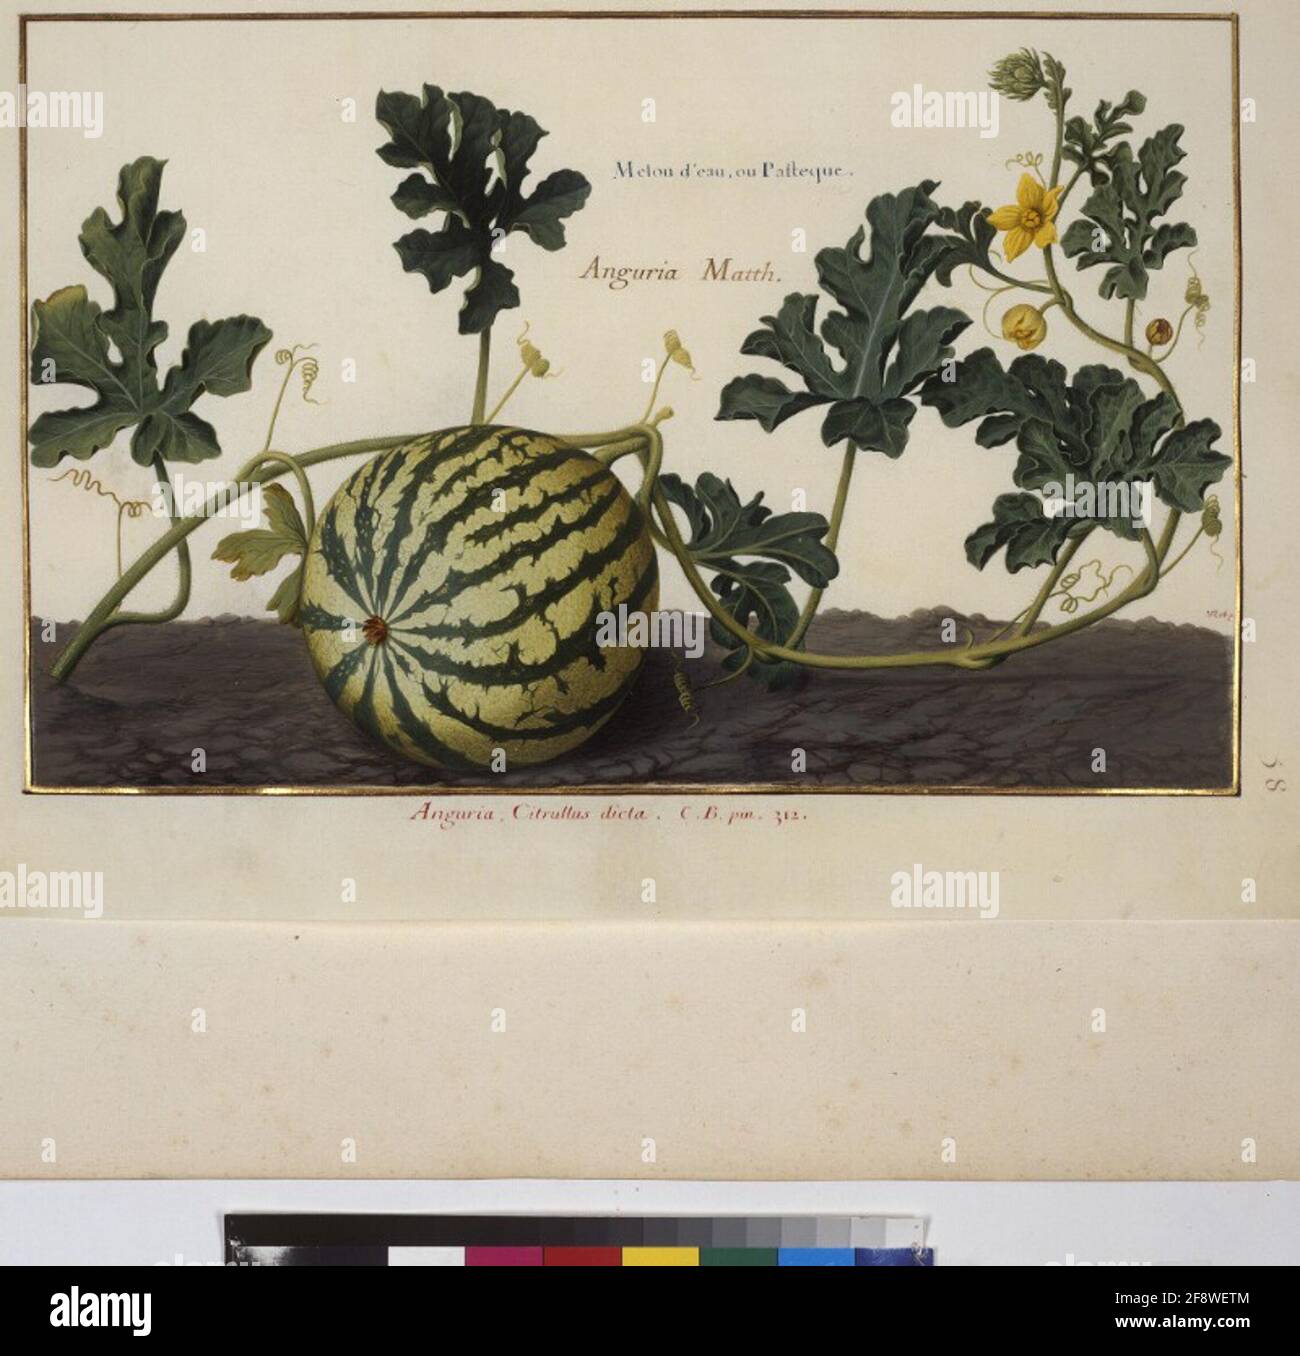 Cod. Min. 53, vol. 2, fol. 58r: Florilegium of Prince Eugene of Savoy: Water melon Full page: plant study (water melon 'Melon d'eau, ou Pasteque. Anguira Matth. Anguira, Citrullus dicta. C.B. pin. 312'). In: Florilegium of Prince Eugene of Savoy, Paris, 3rd quarter of the 17th c., artist: Nicolas Robert (1614–1685) Stock Photo